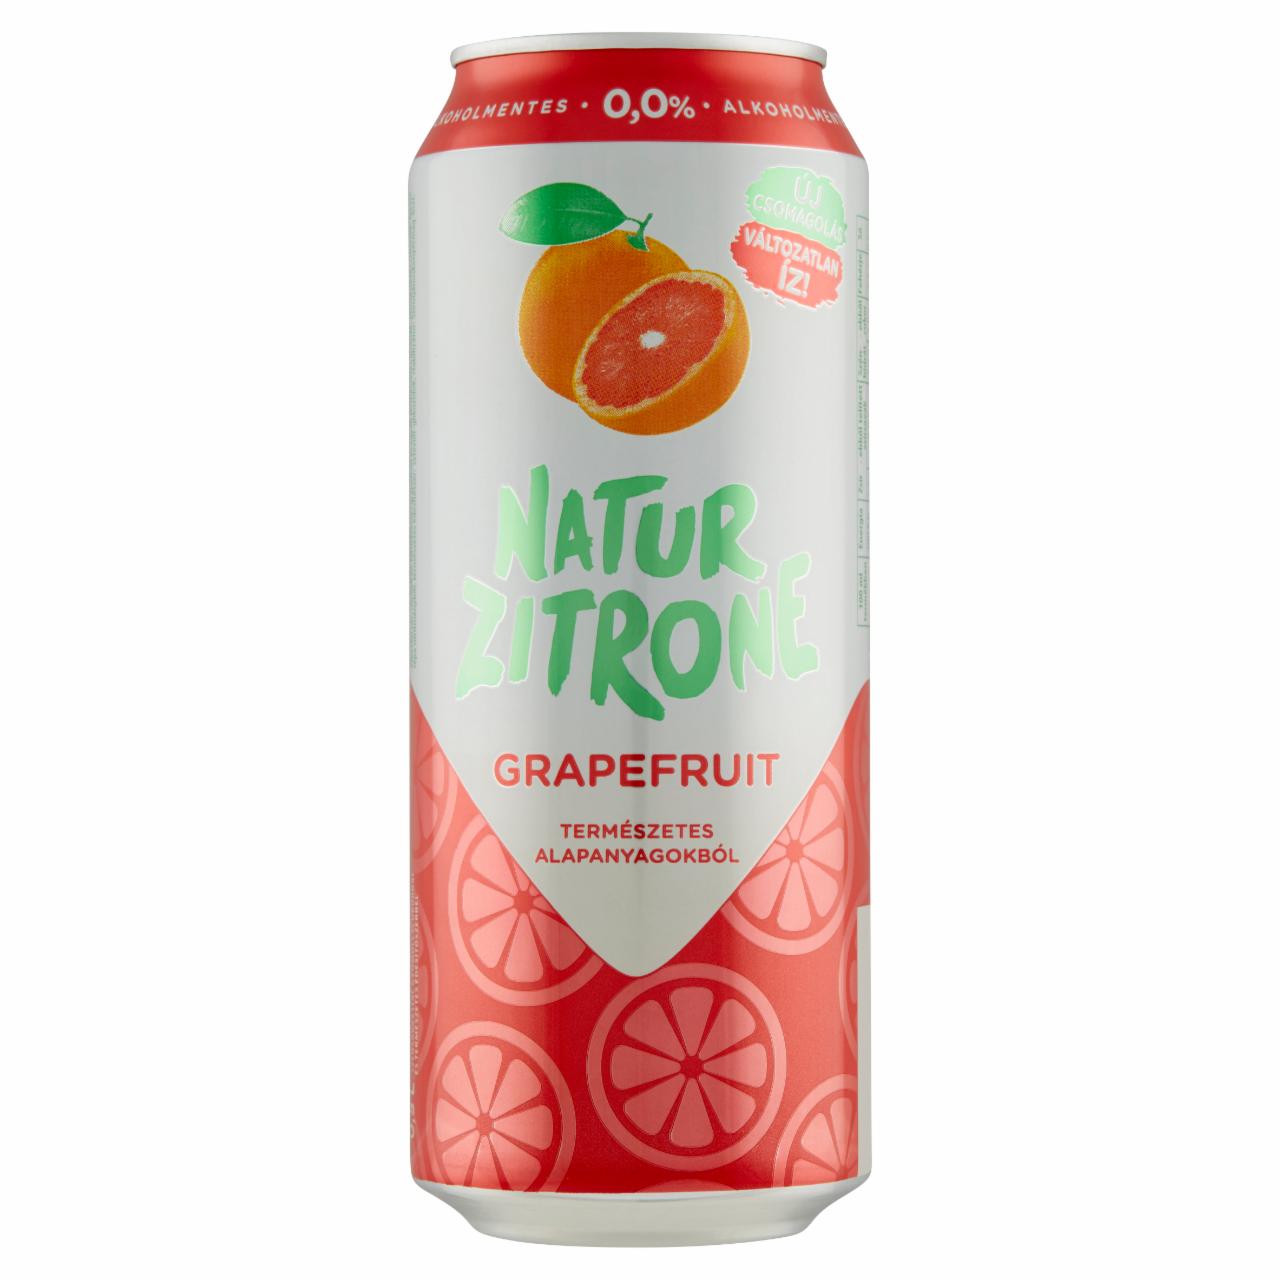 Képek - Natur Zitrone alkoholmentes grapefruitos szénsavas ital doboz 0,5 l